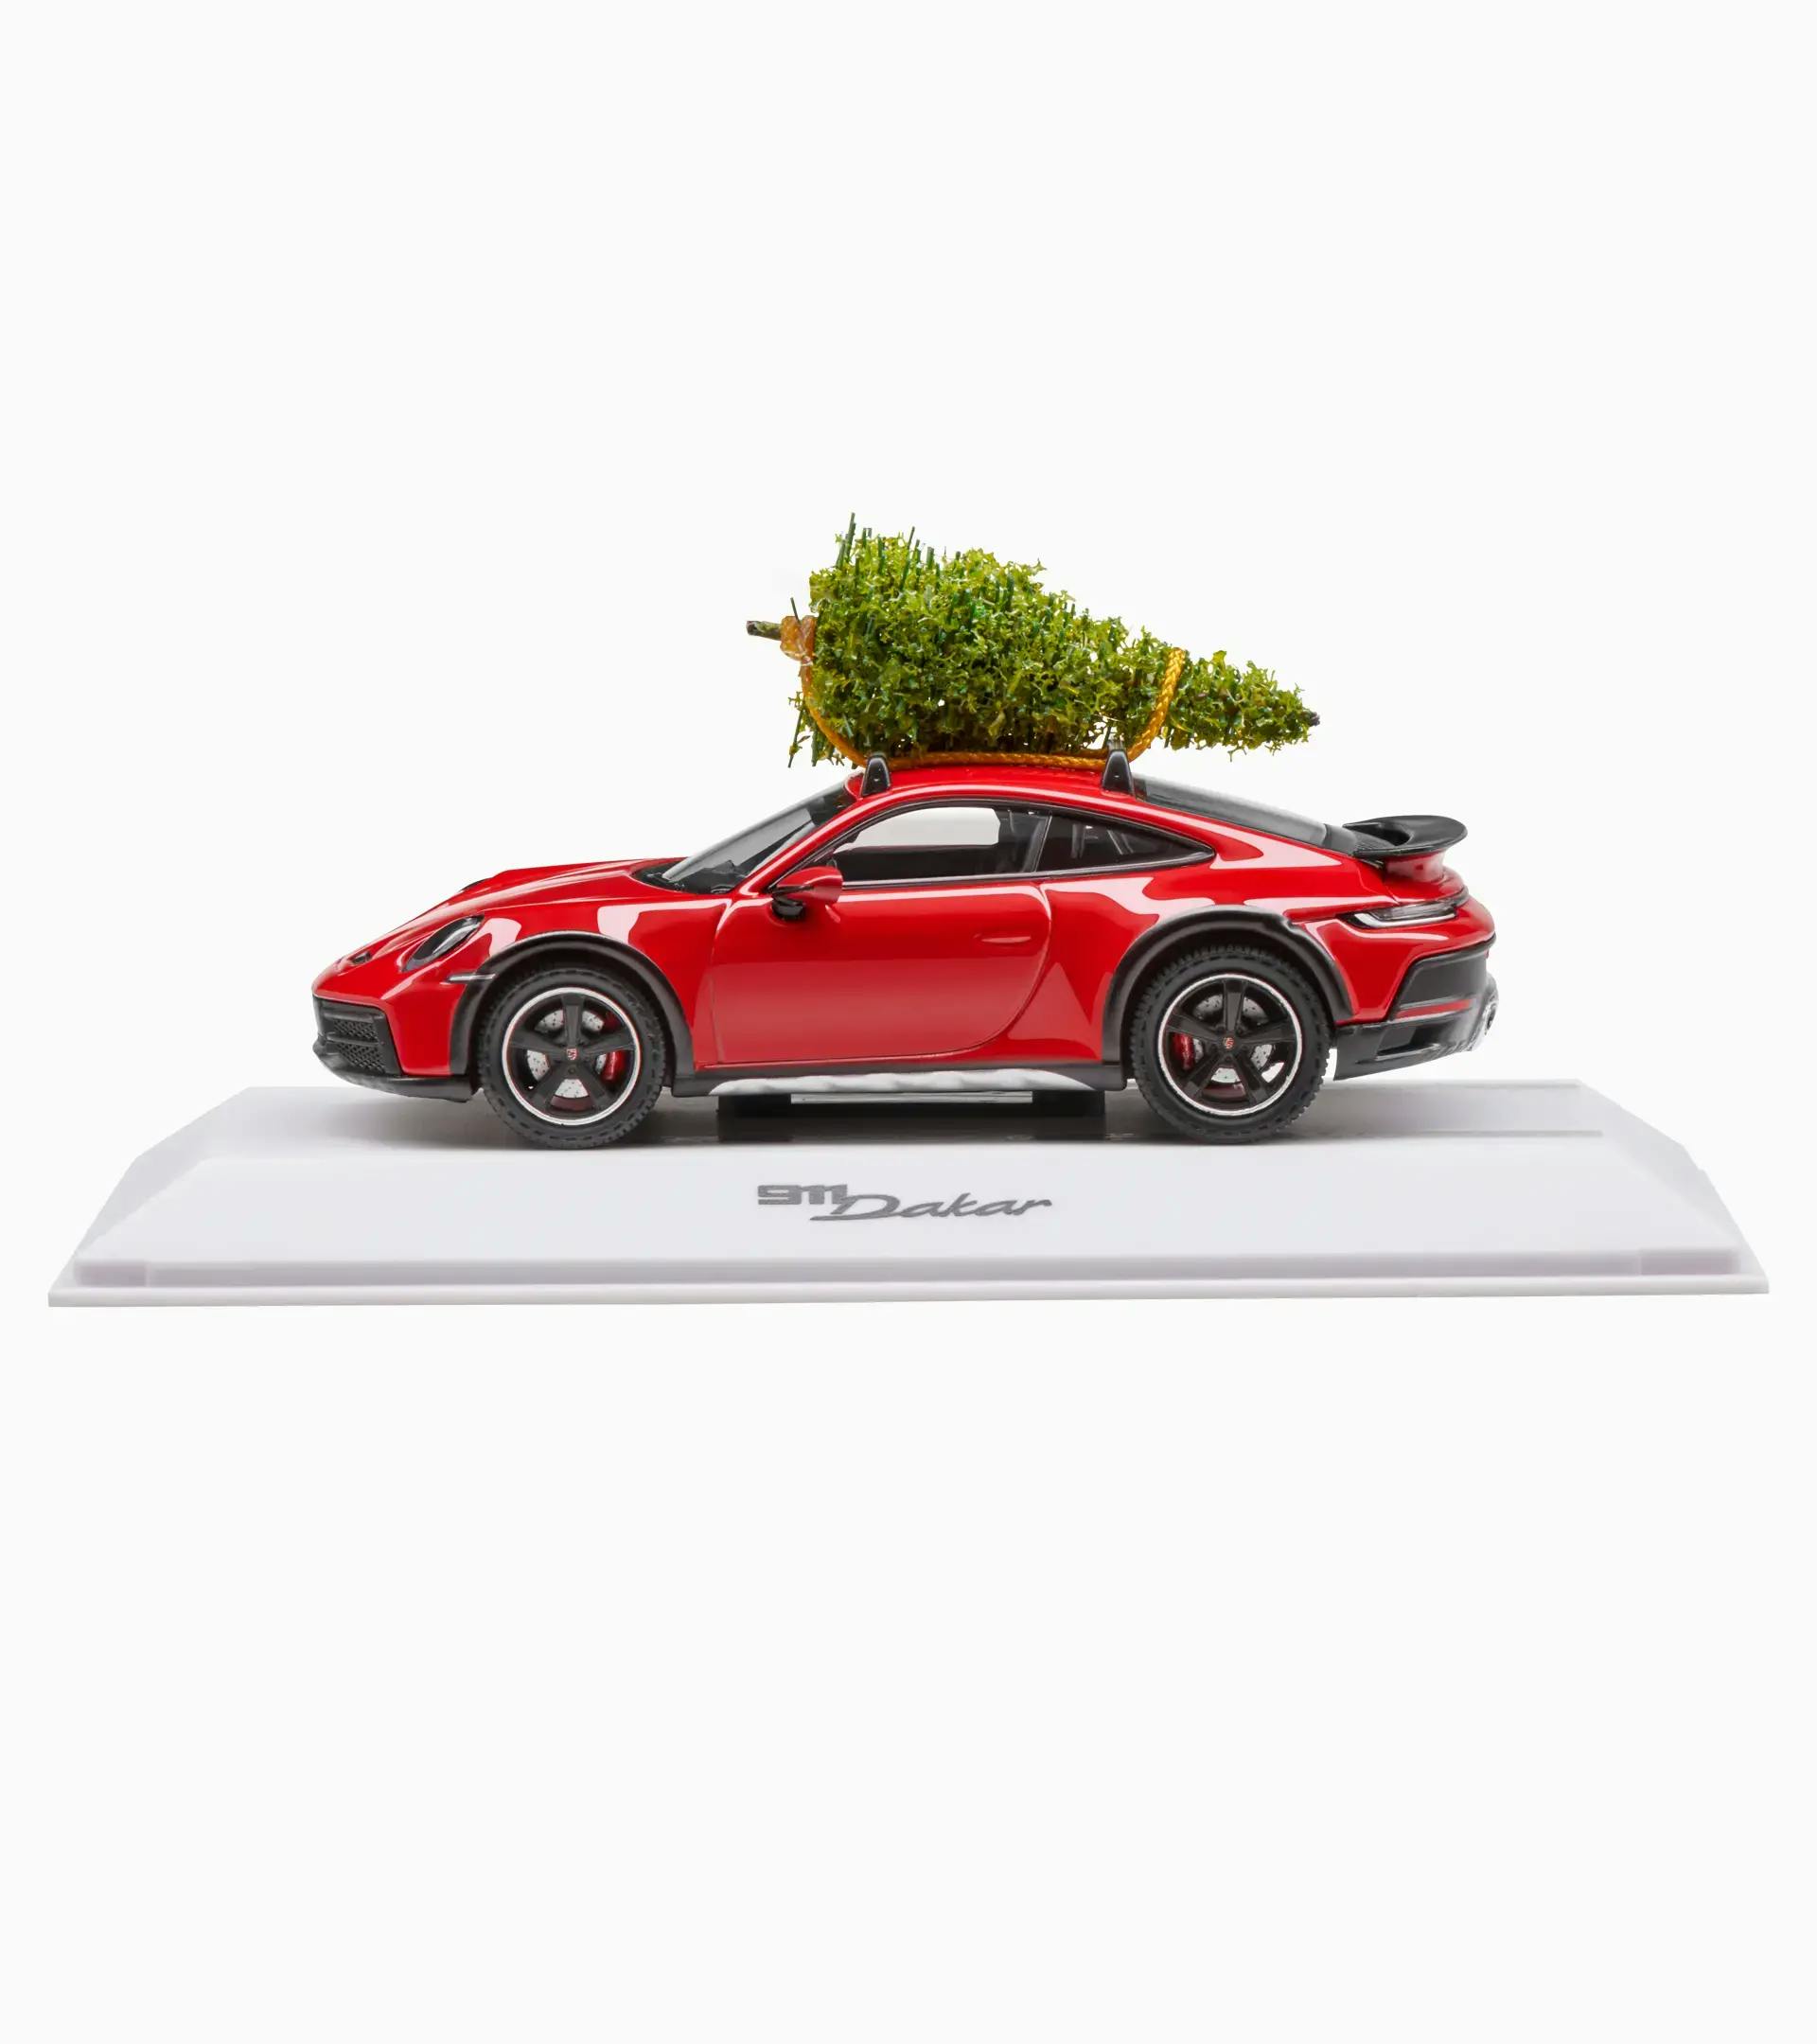 Porsche 911 Dakar (992) with Christmas tree – Christmas 2